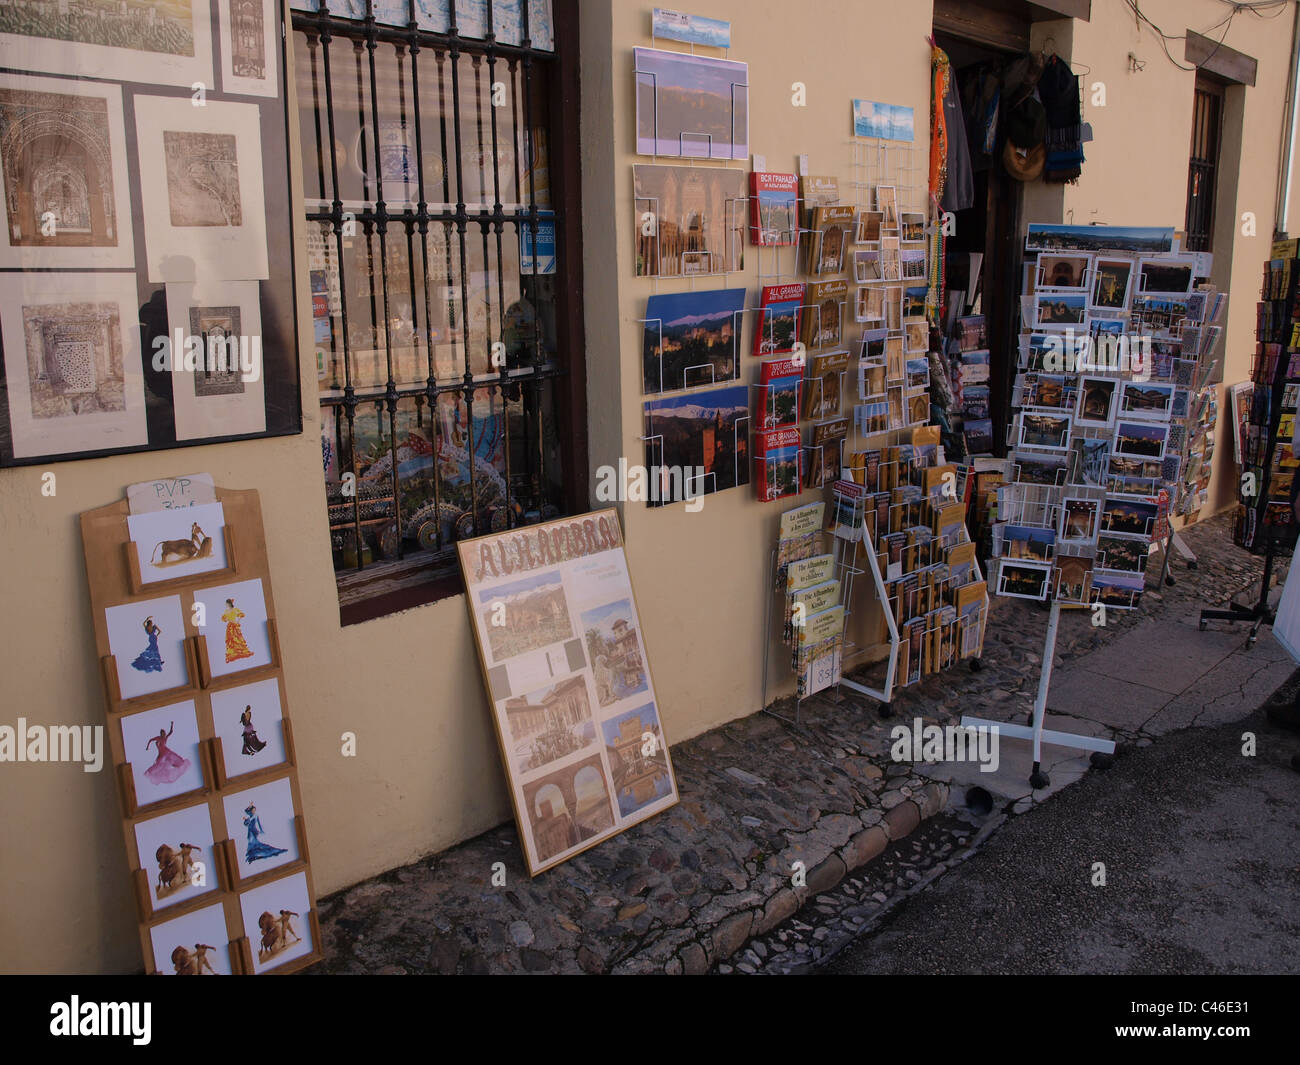 Alhambra souvenirs shop fotografías e imágenes de alta resolución - Alamy